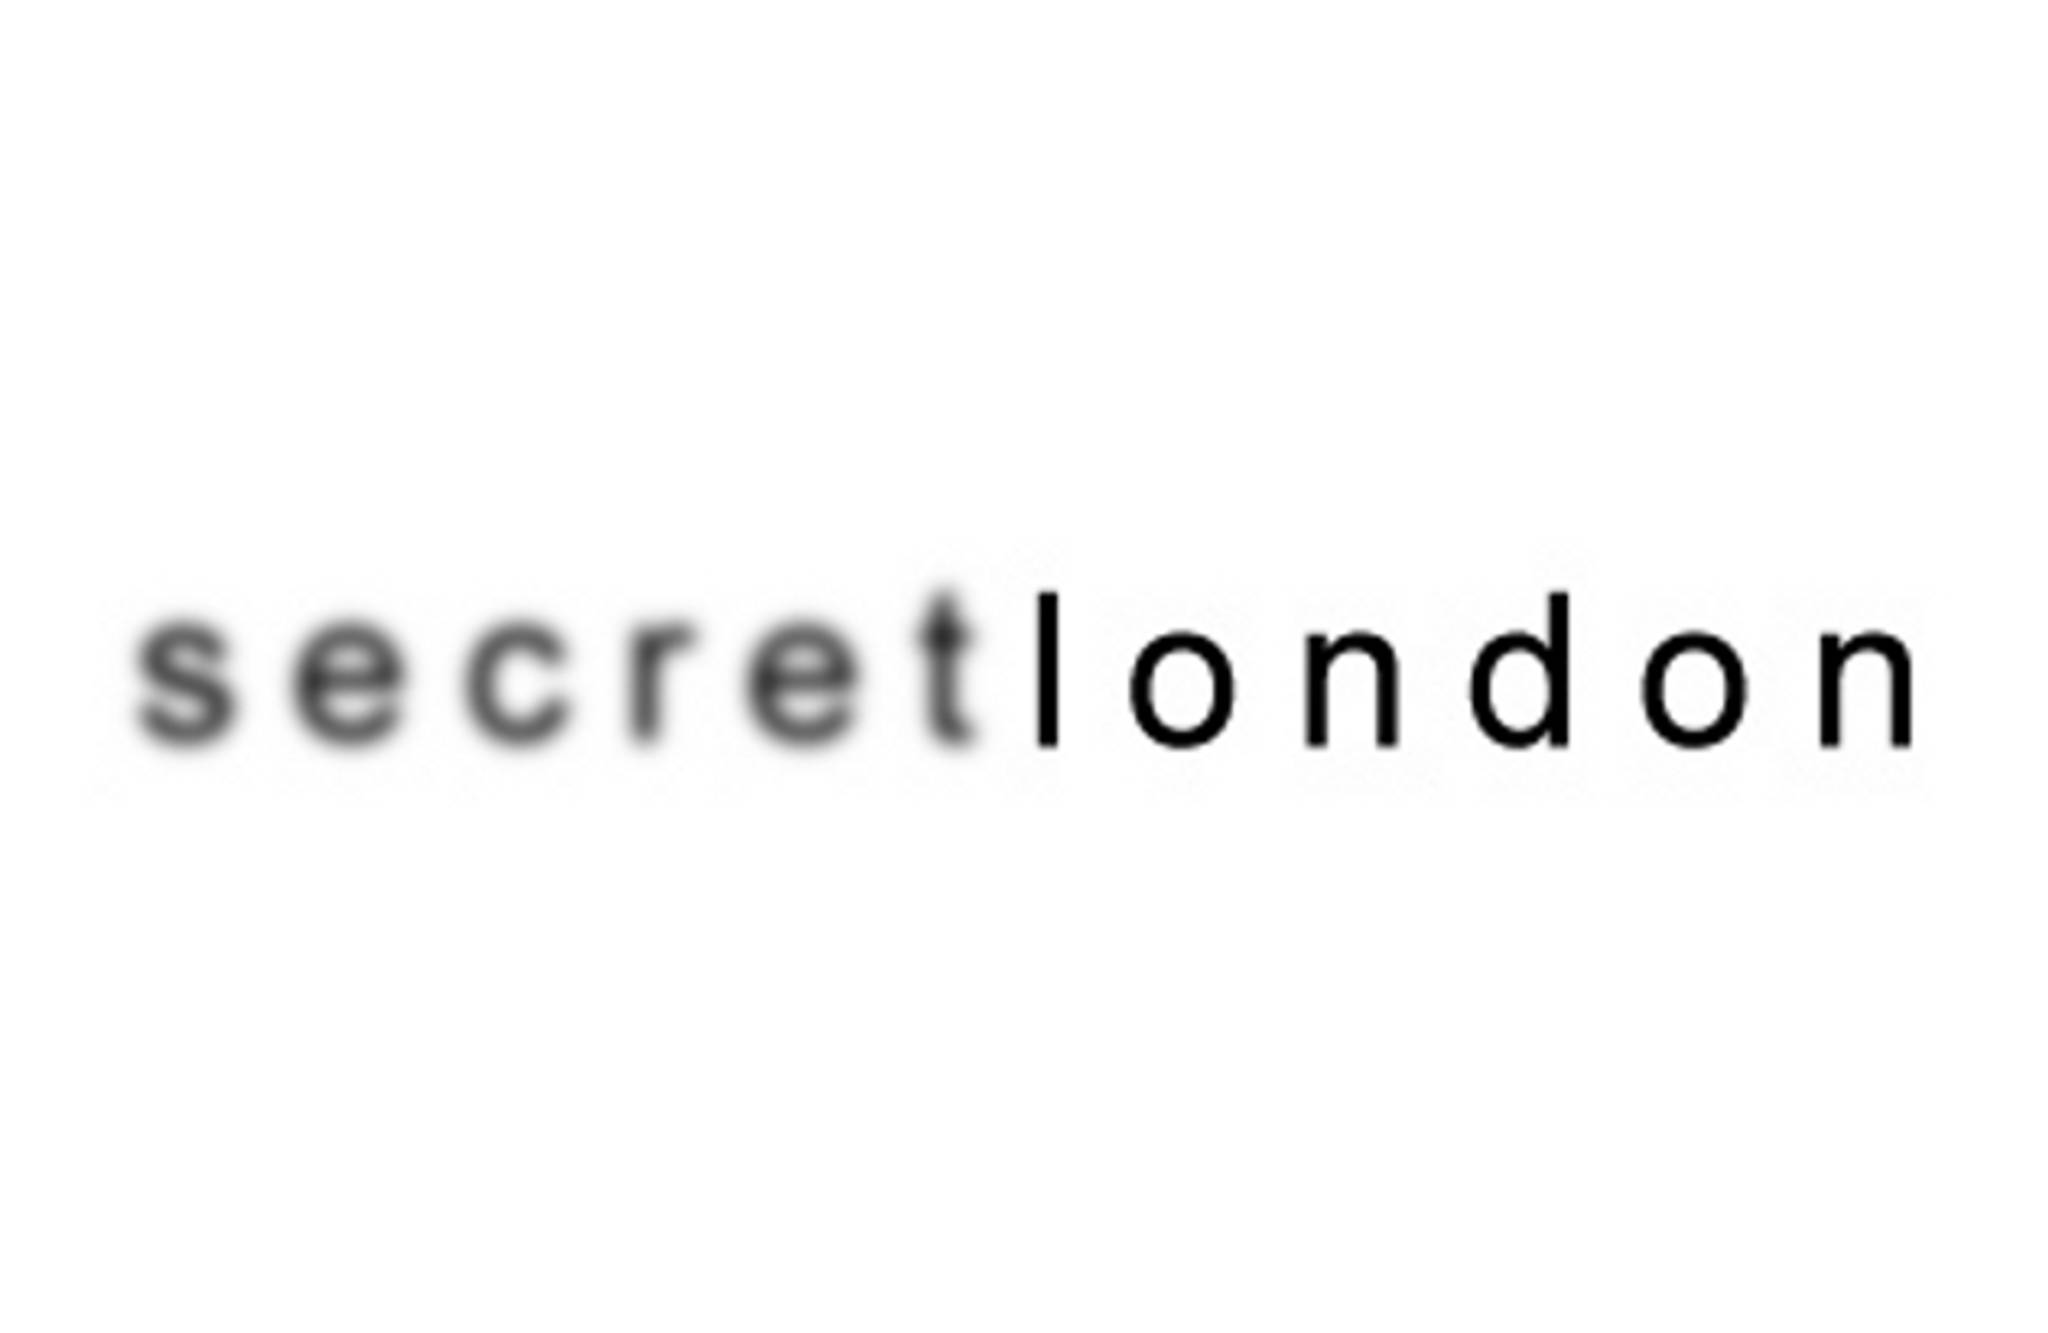 Secret London